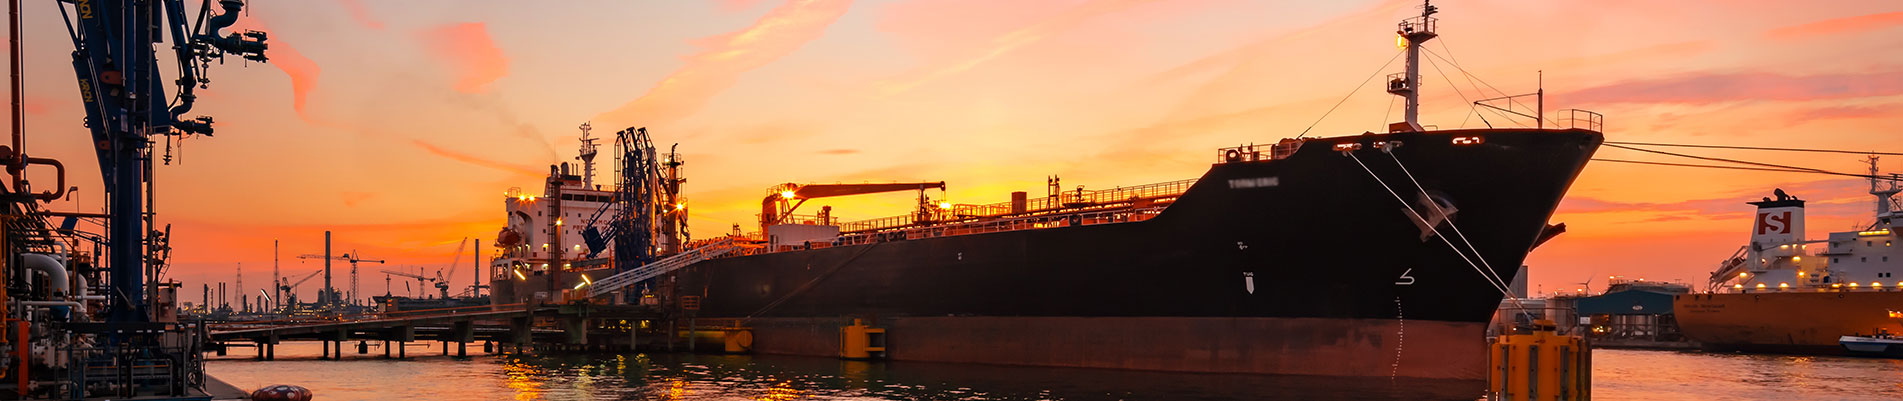 vessel at port at sunset